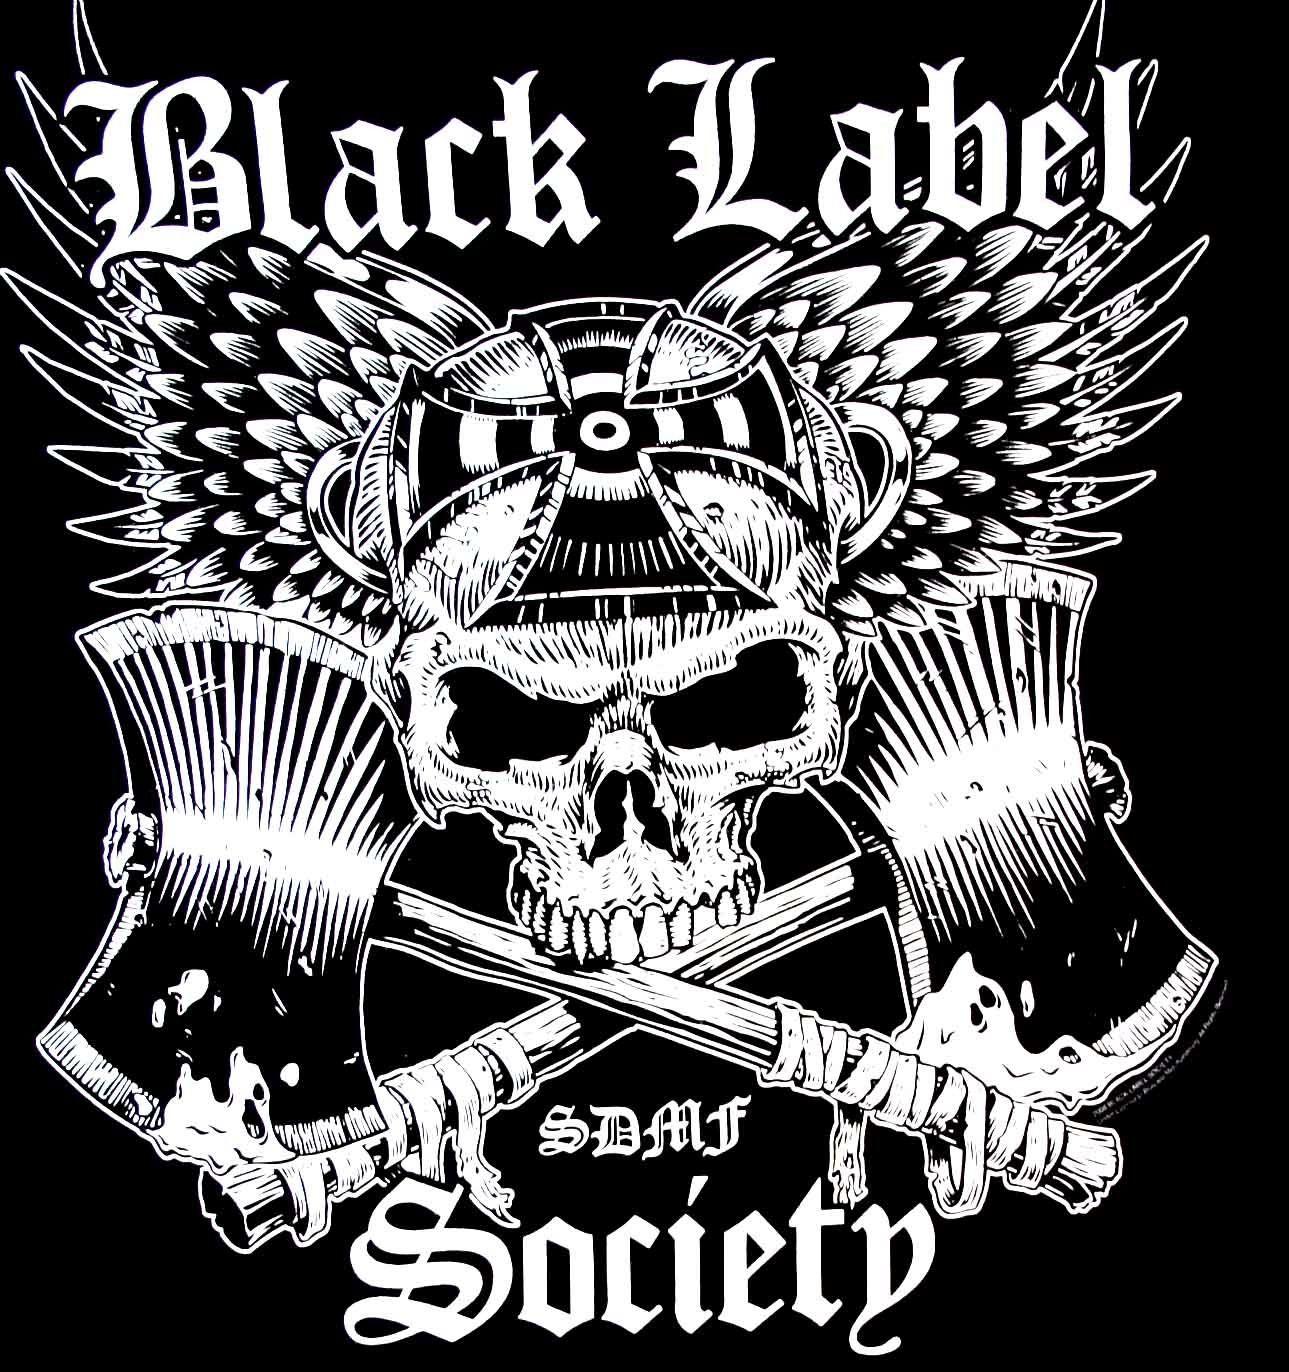 1289x1372px Black Label Society 808.5 KB